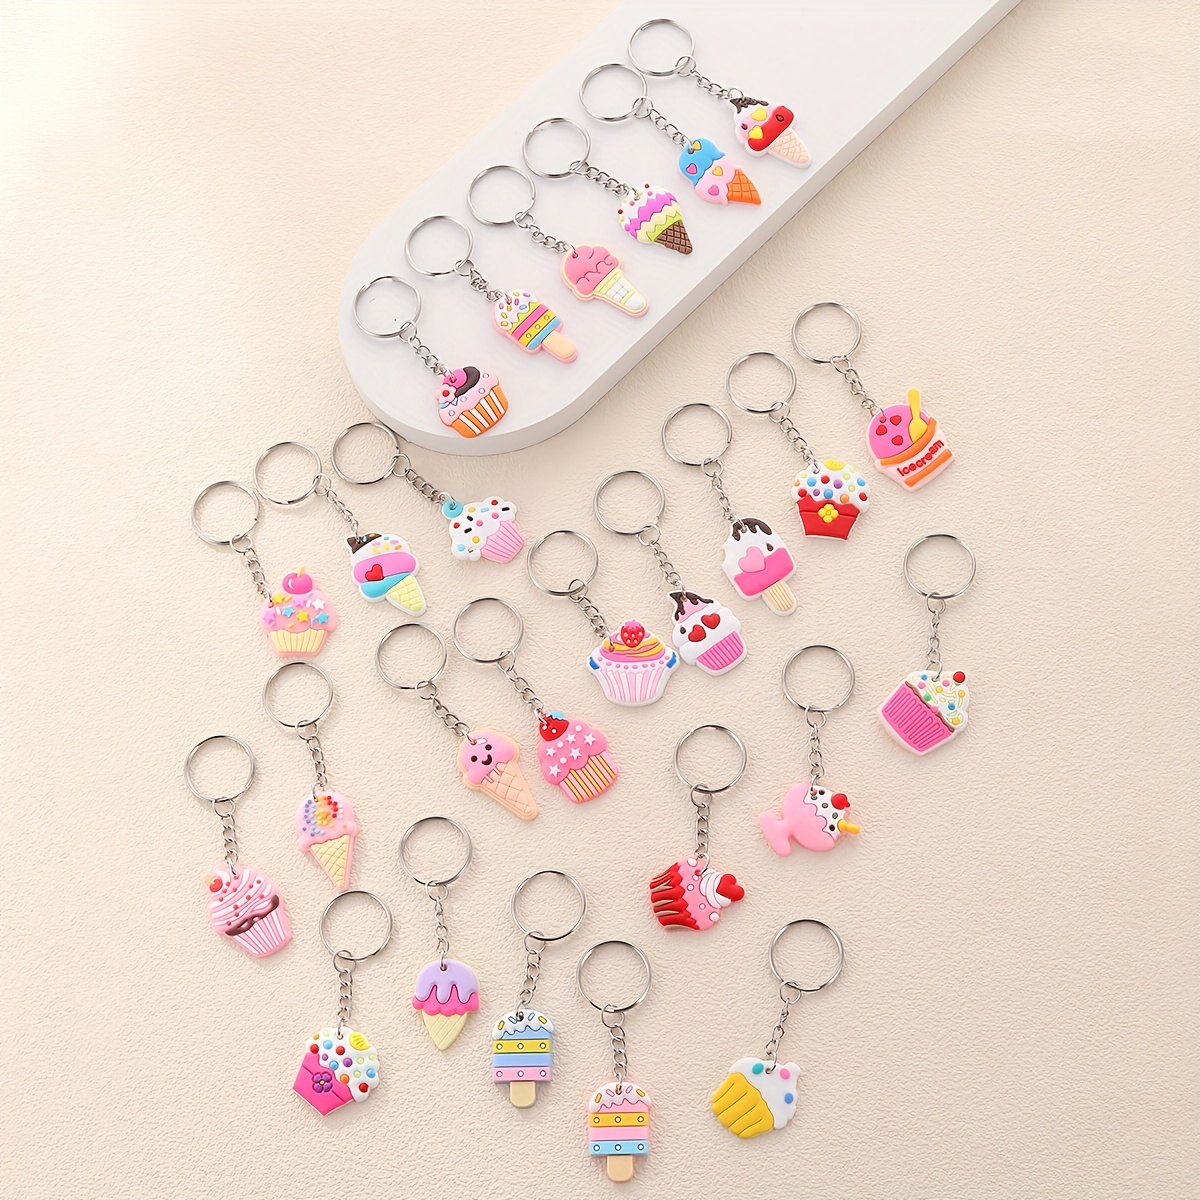 Pvc Ice Cream Keychain, Cute Cartoon Key Rings Party Favor Gift